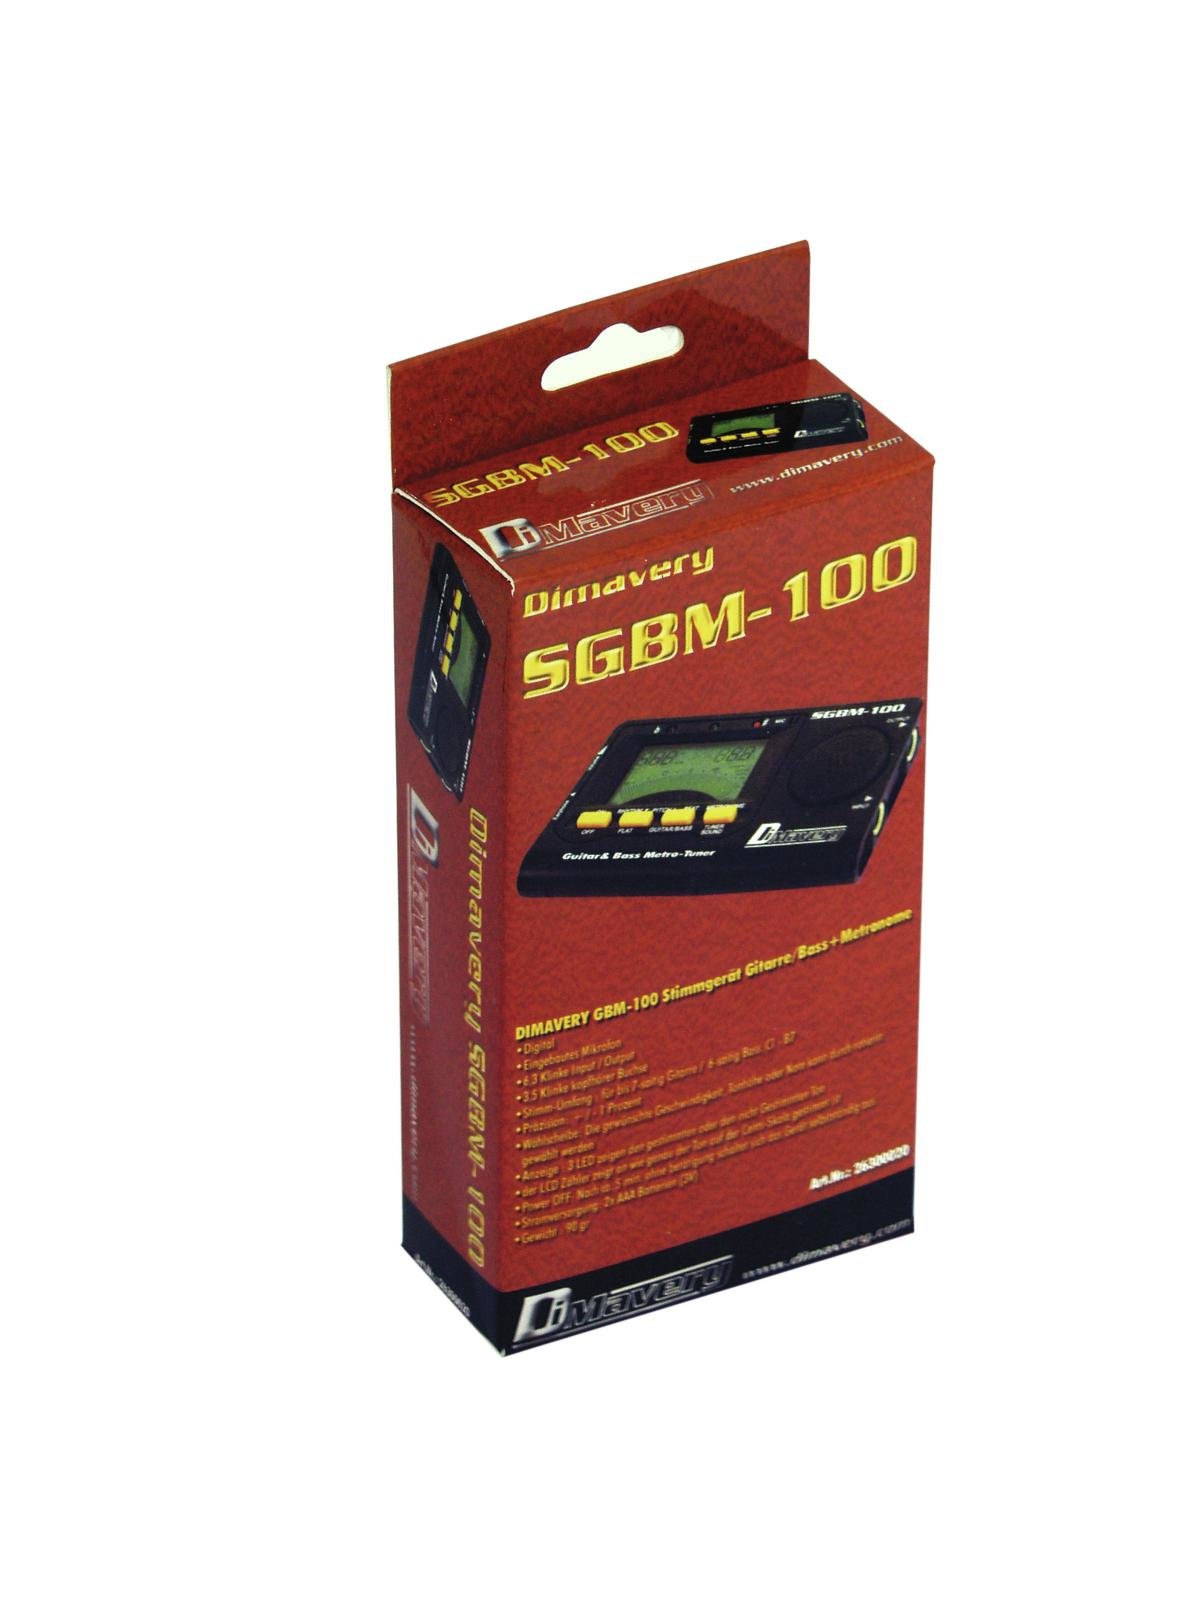 DIMAVERY SGBM-100 Stimmgerät mit Metronom